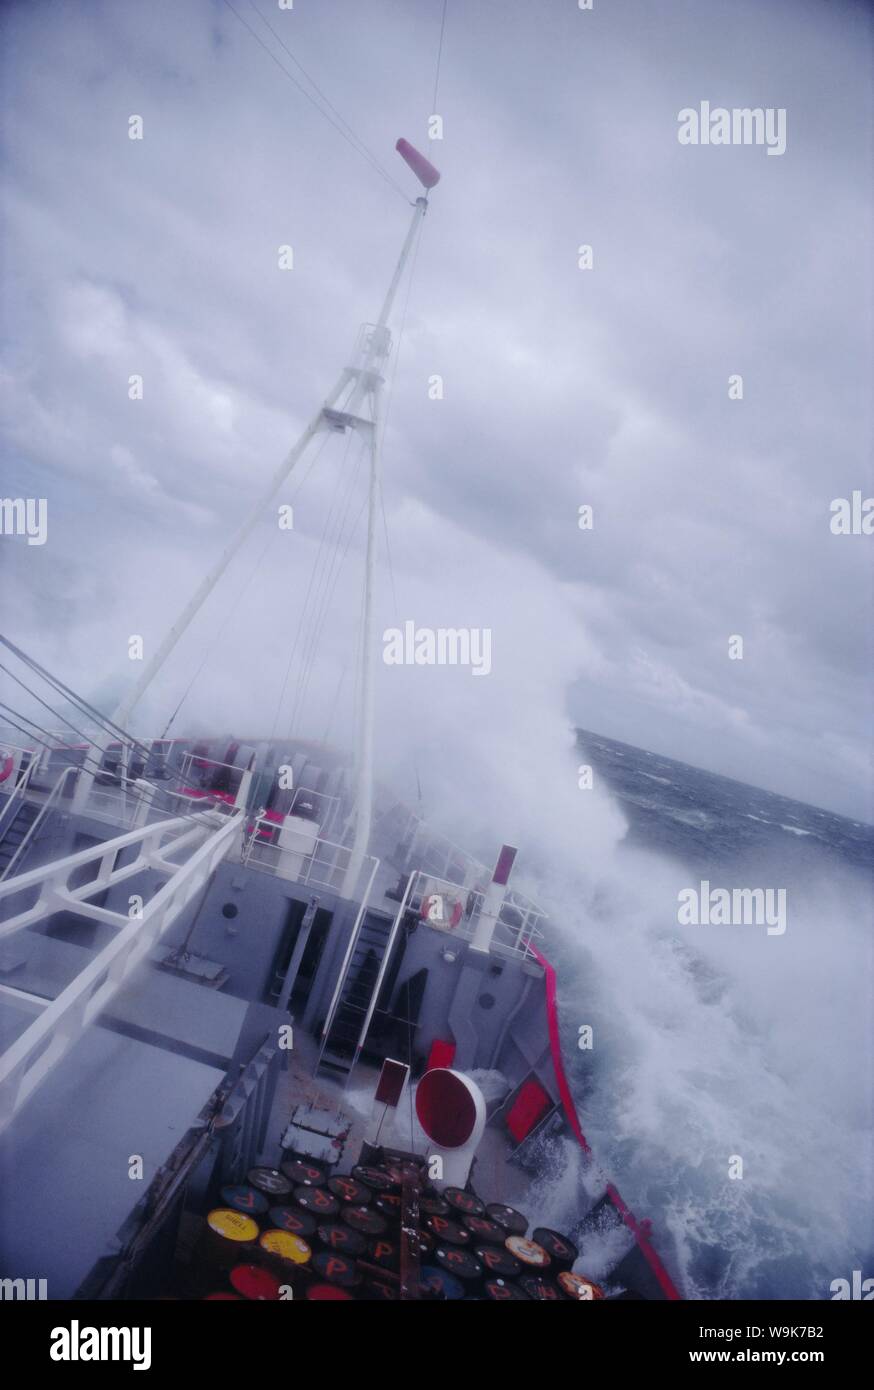 Ship in rough seas, Antarctic Ocean, Antarctica Stock Photo